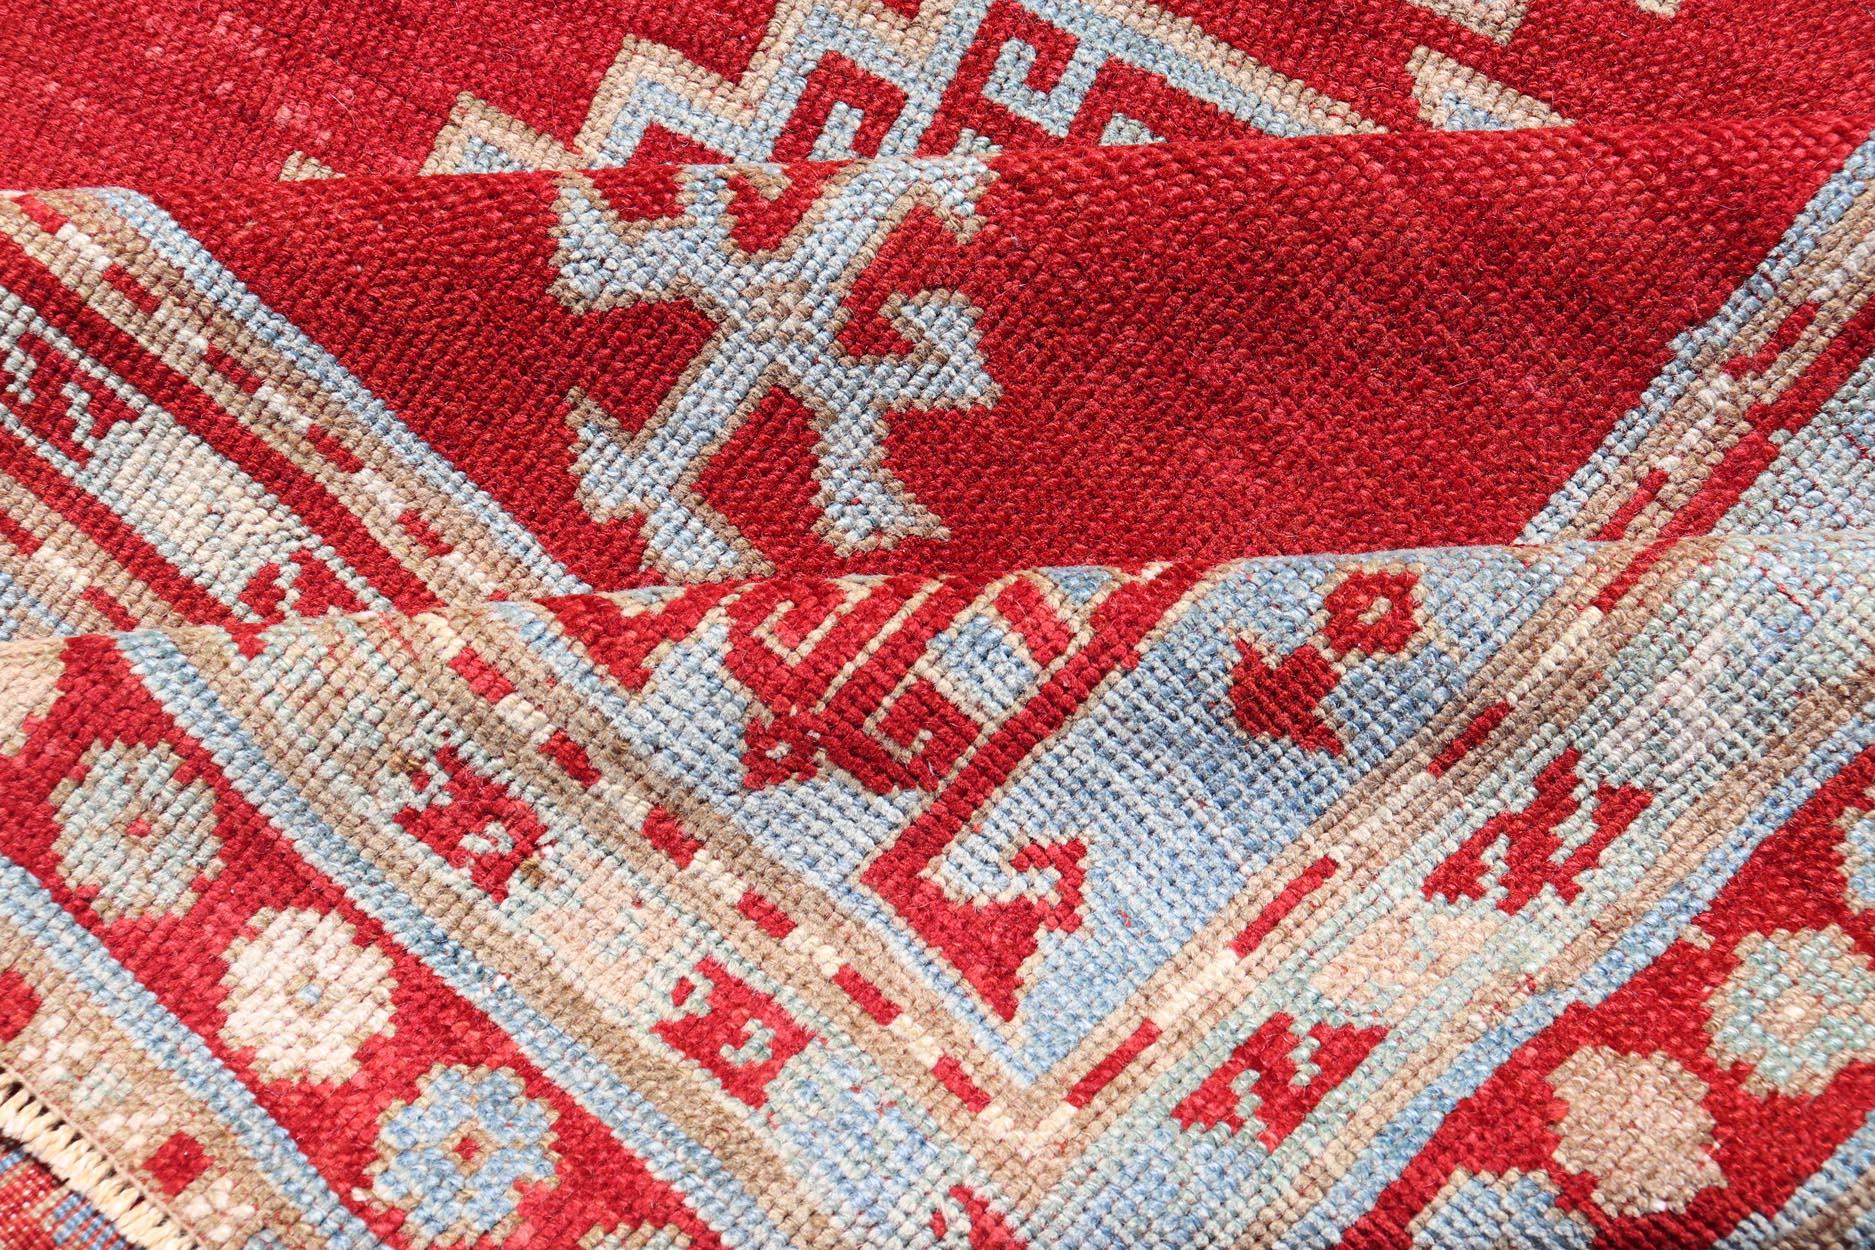 Antique Caucasian Kazak Gallery Rug in Brilliant Red with Geometric Design For Sale 5